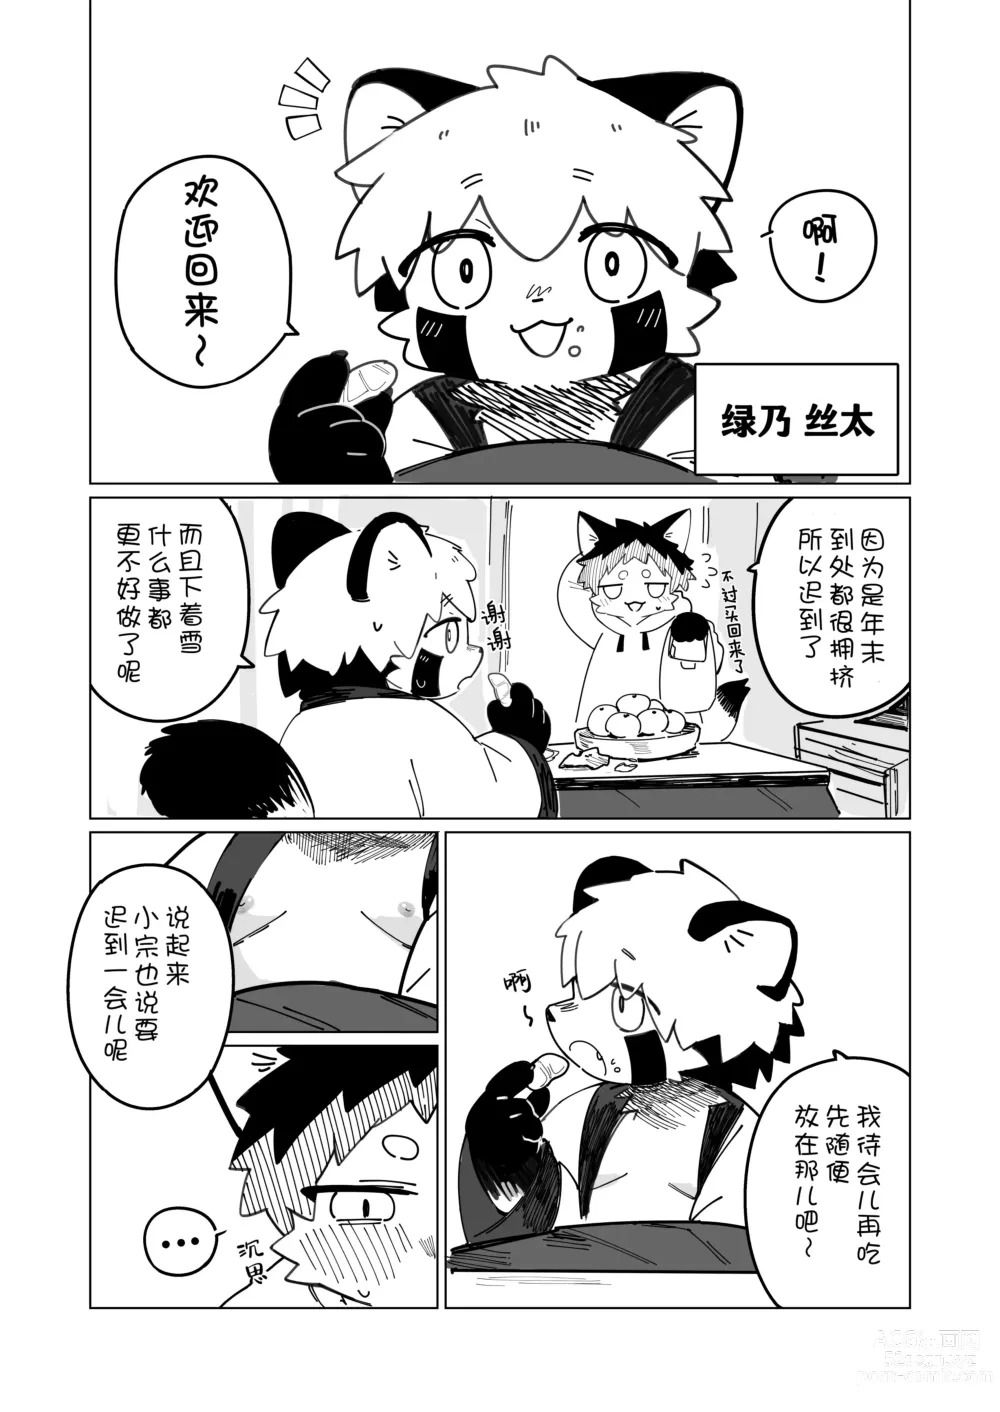 Page 3 of doujinshi 在跨年夜做那种事情的故事